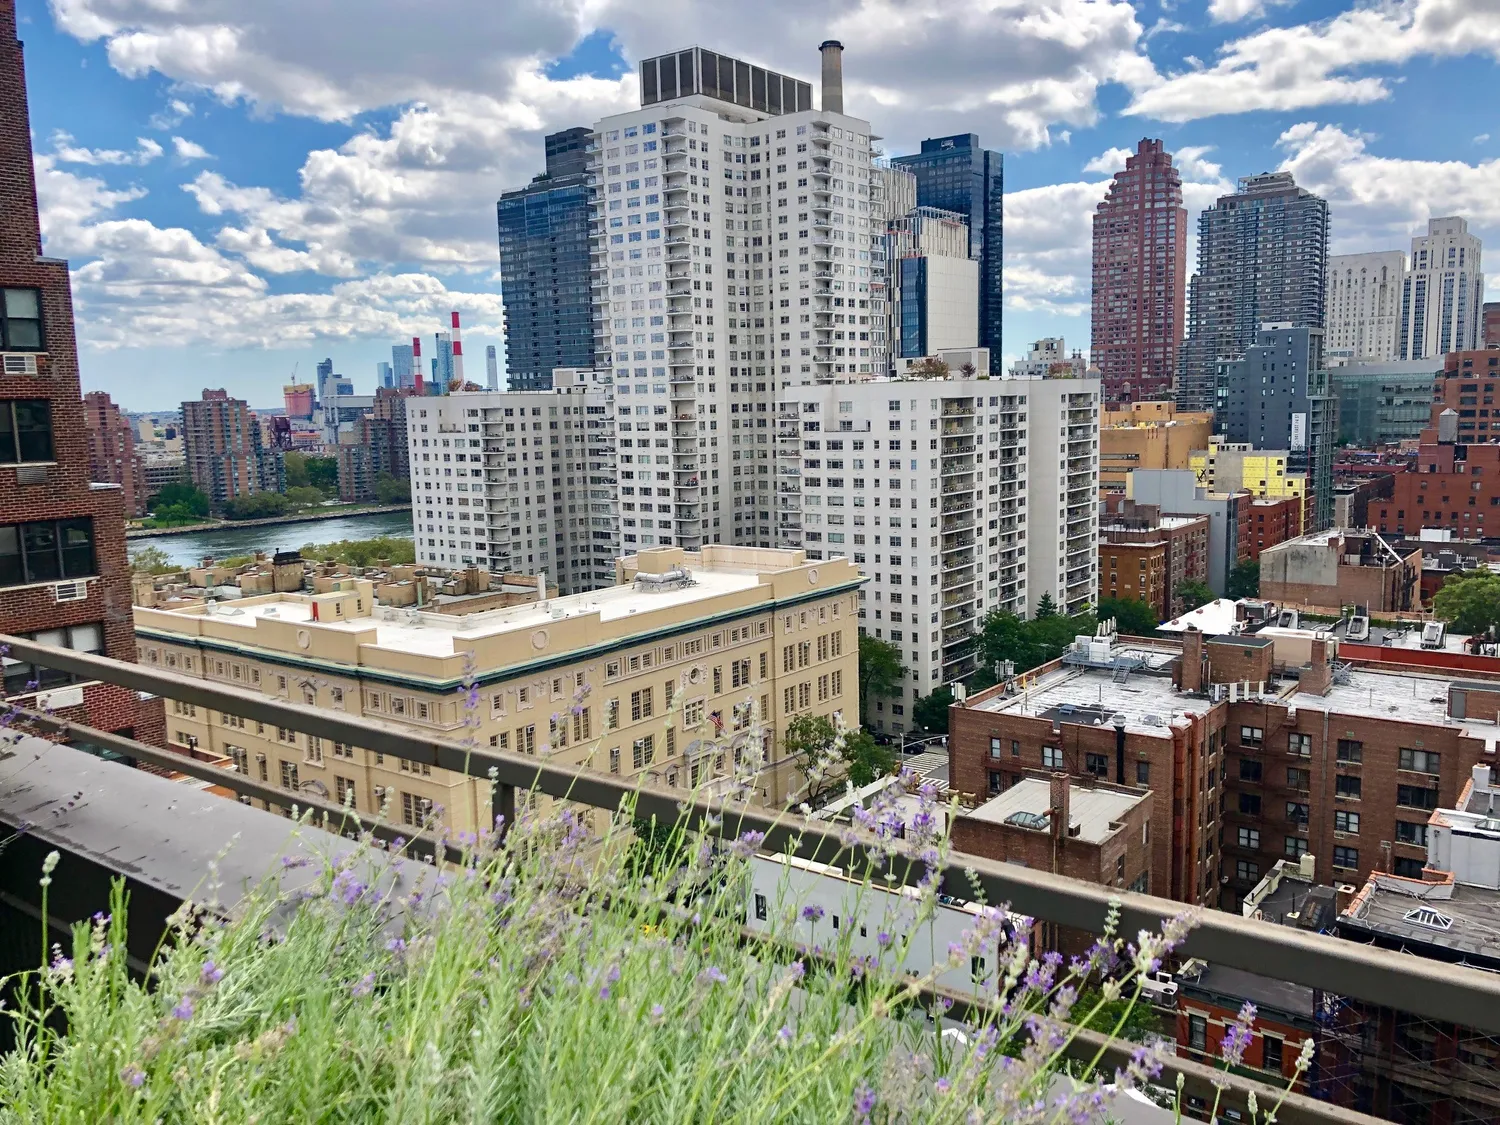 360 degree views of Manhattan skyline from roof.